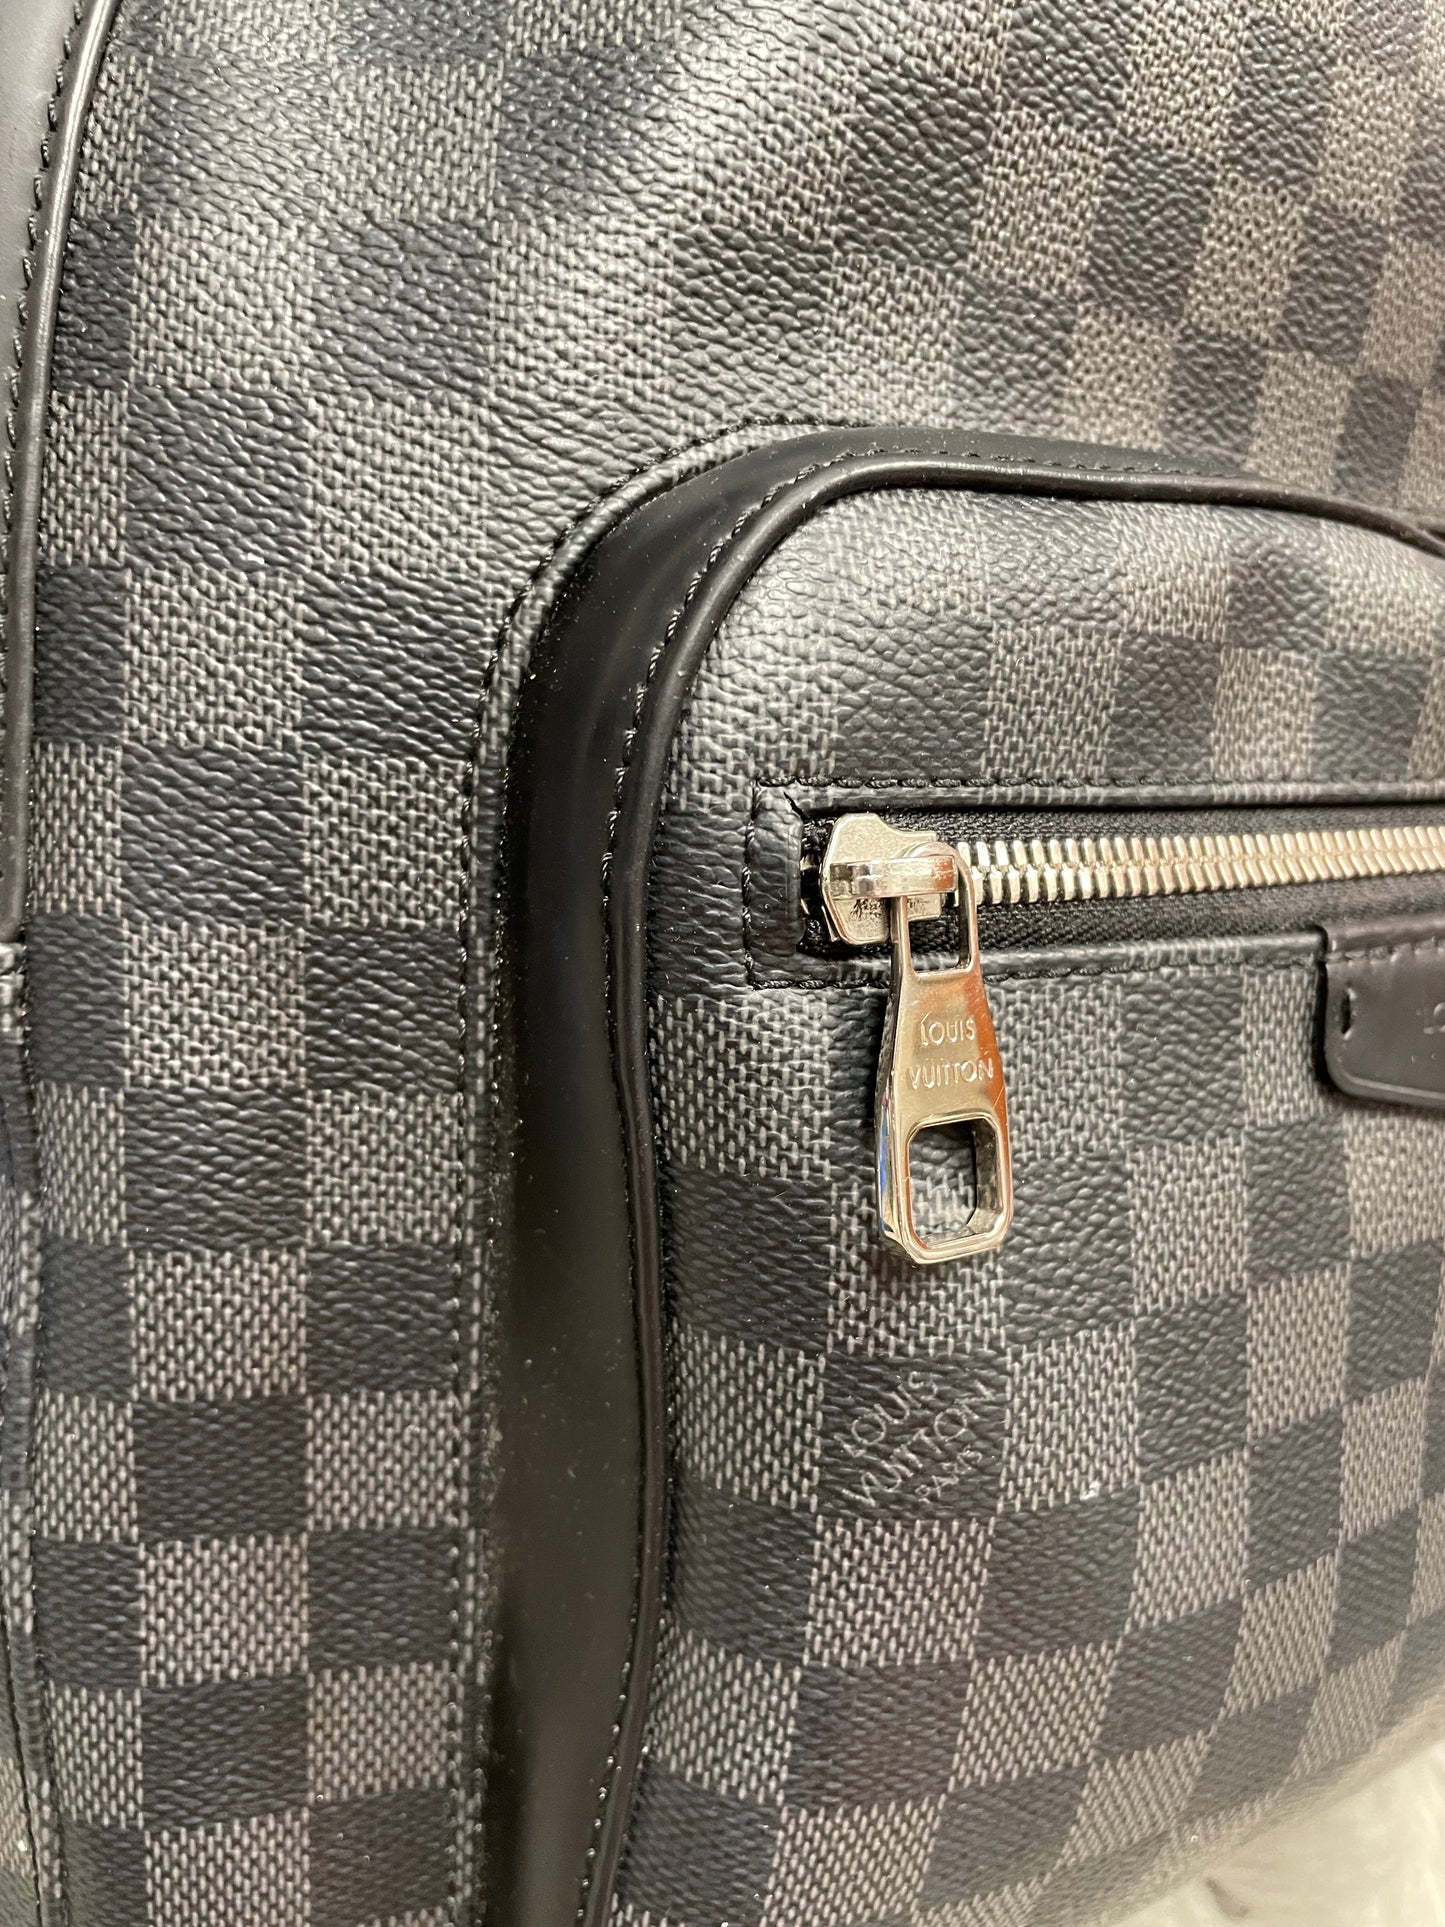 Backpack Luxury Designer Louis Vuitton, Size Large